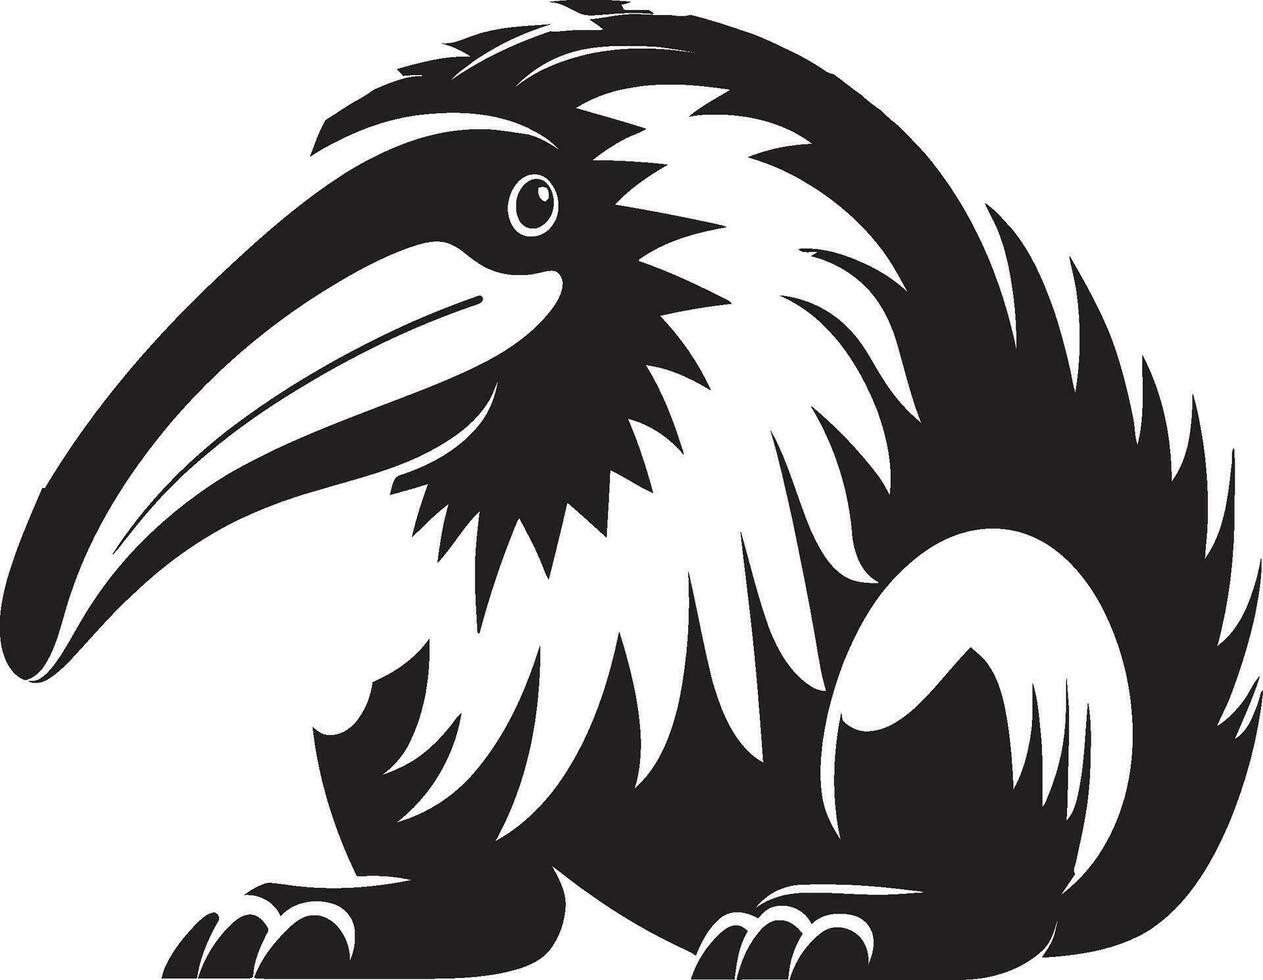 Graceful Black Anteater Logo Vector Artistry in Black Black Anteater Vector Icon Logo Excellence in Simplicity